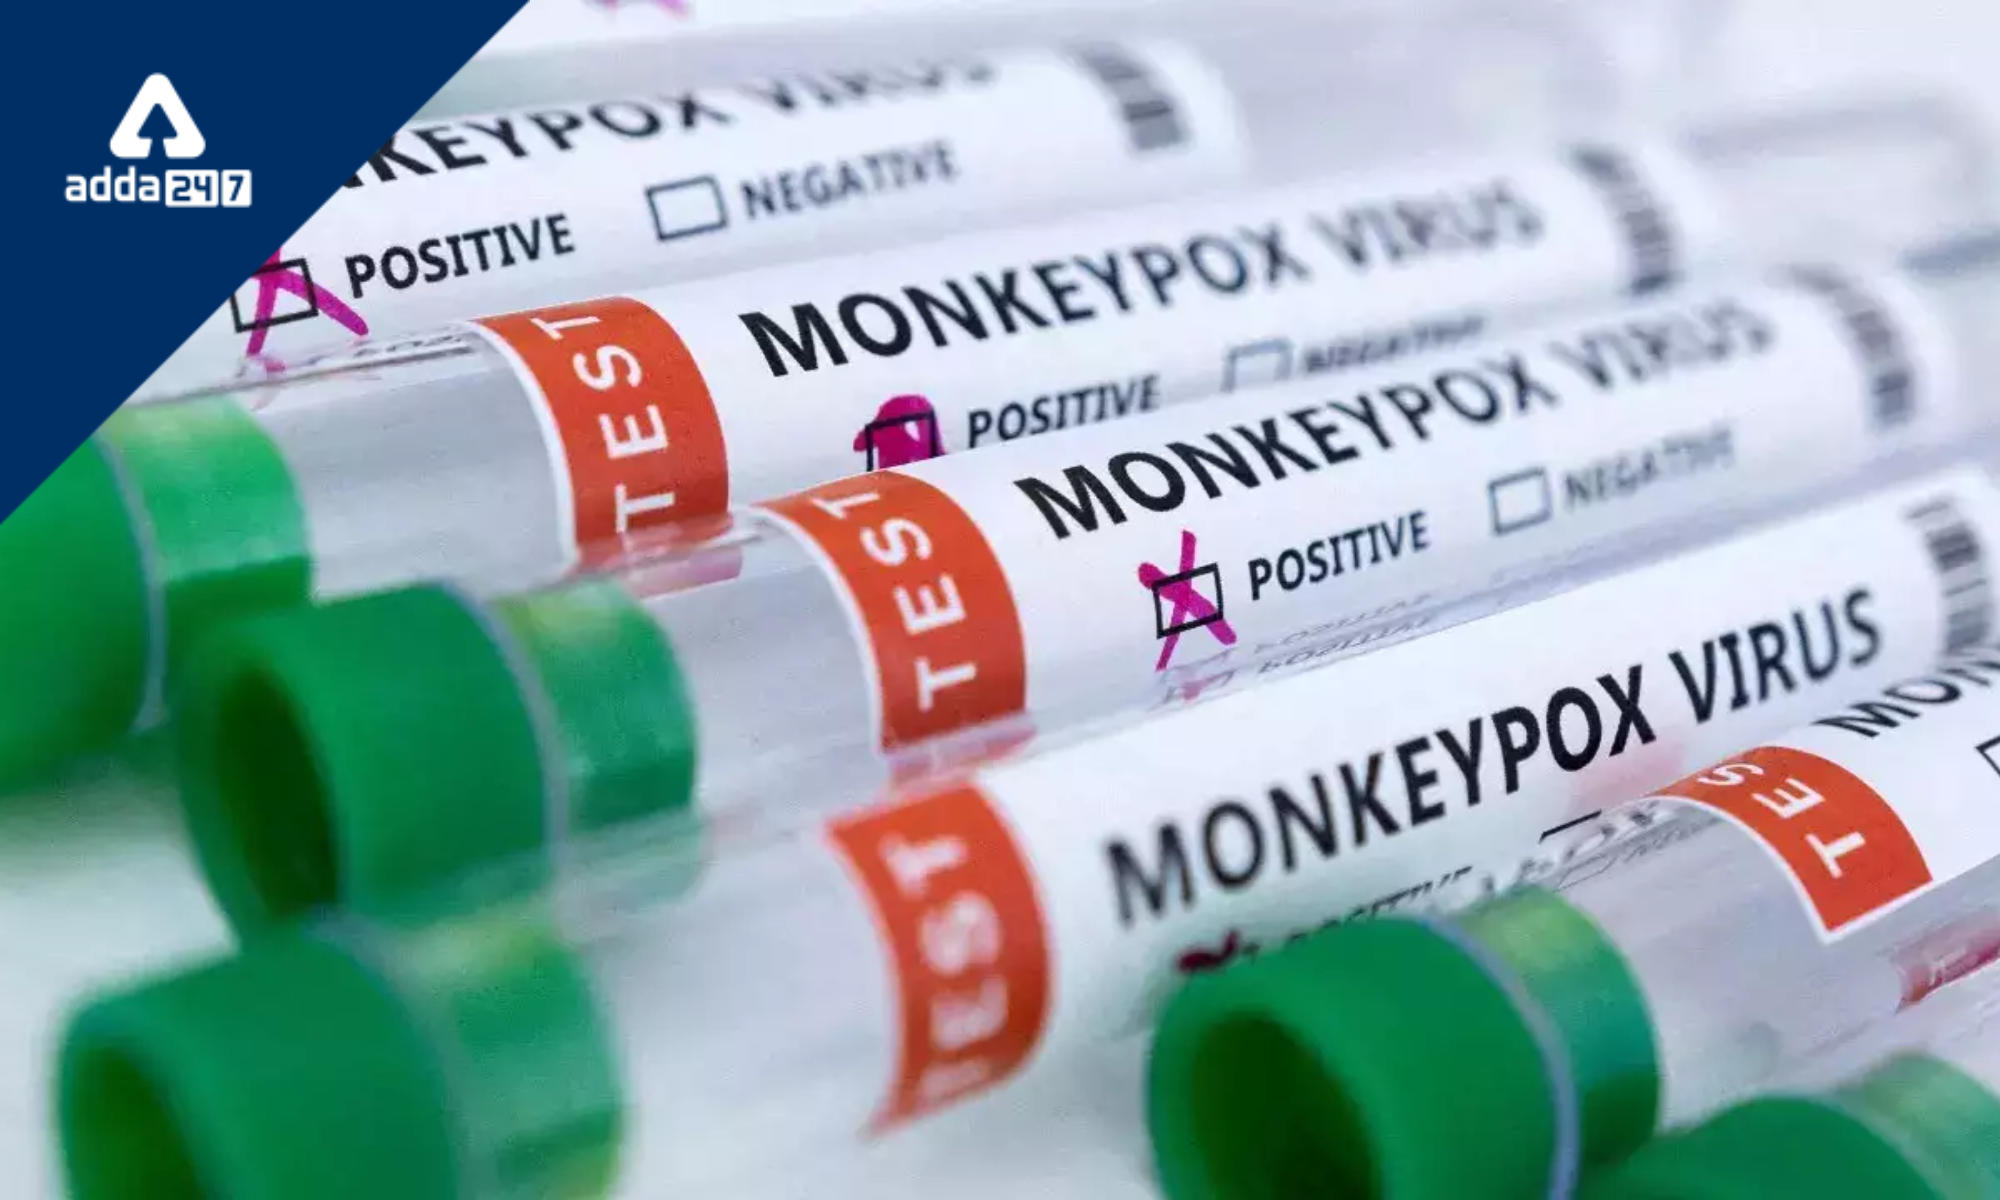 Monkeypox virus: Centre creates special task force under VK Paul